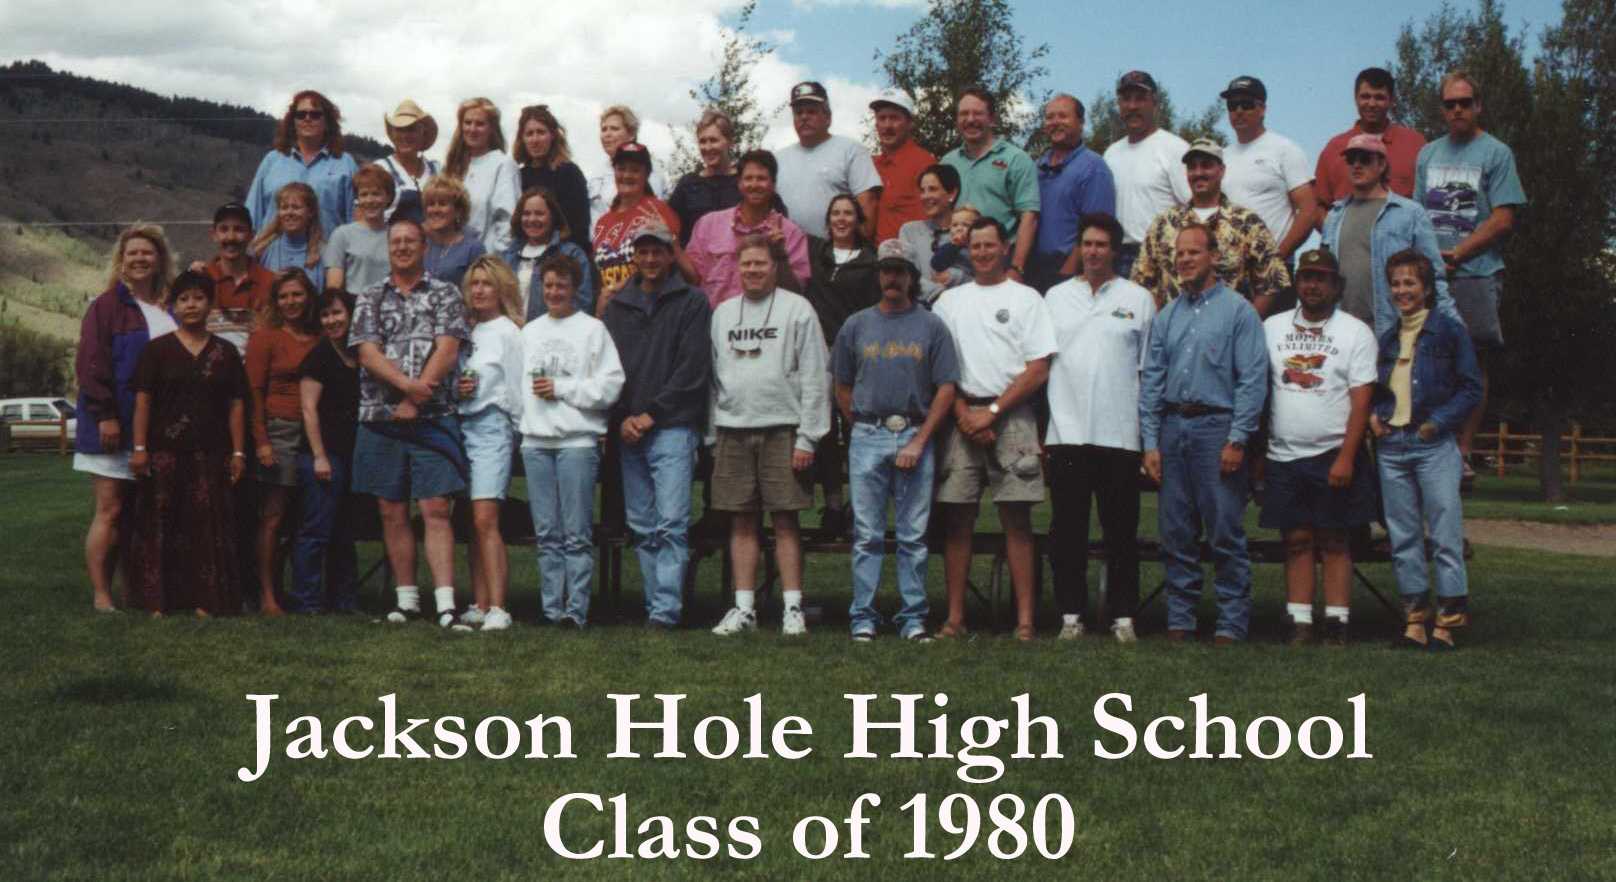 Jackson Hole High School 20 year reunion